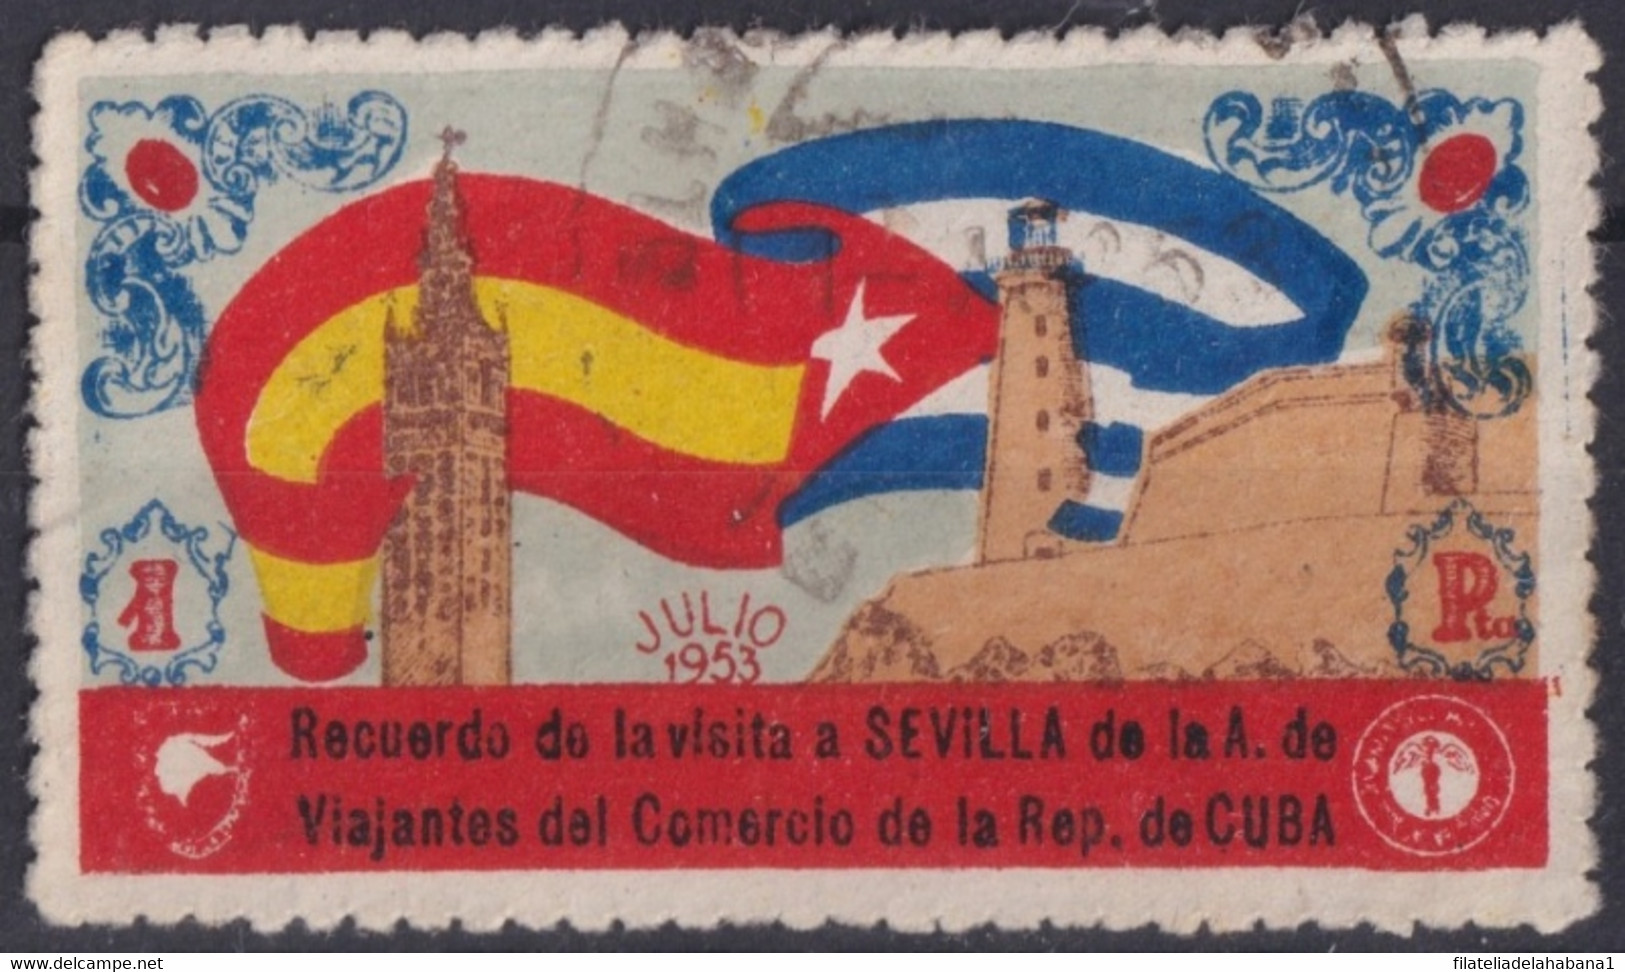 VI-517 CUBA REPUBLICA 1953 CINDERELLA VIAJANTES DEL COMERCIO VISTAN SEVILLA MORRO CASTLE. - Frankeervignetten (Frama)